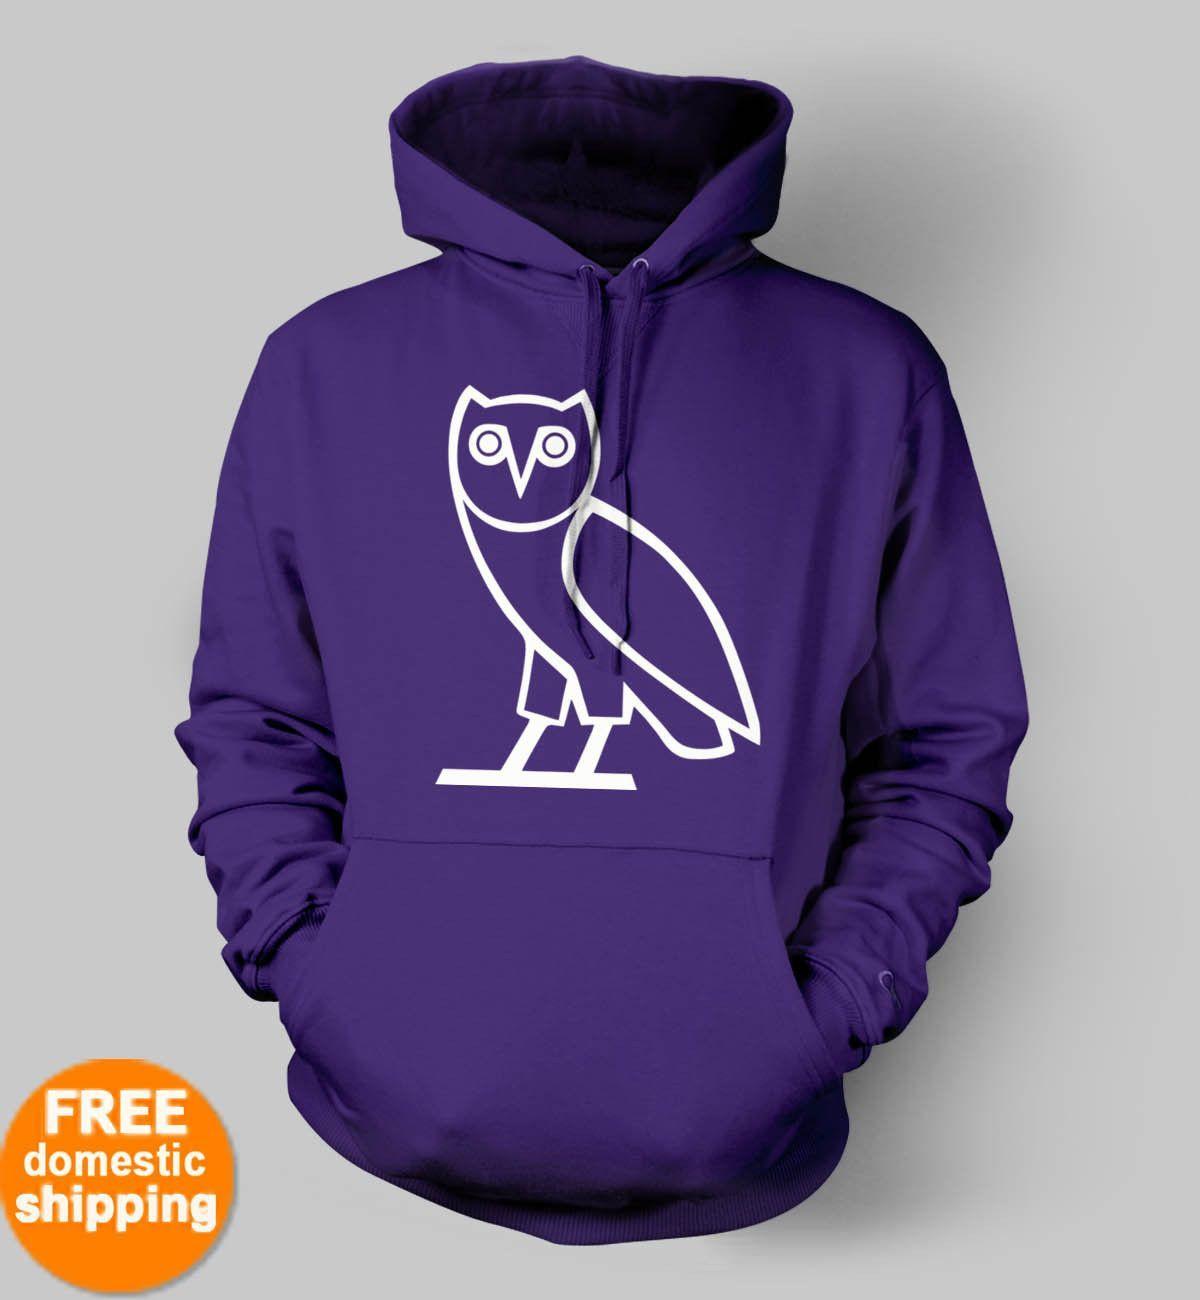 Owl Fashion Logo - OVOXO gold owl logo hoodie OVO XO Drake Fan hooded sweatshirt $37.95 ...